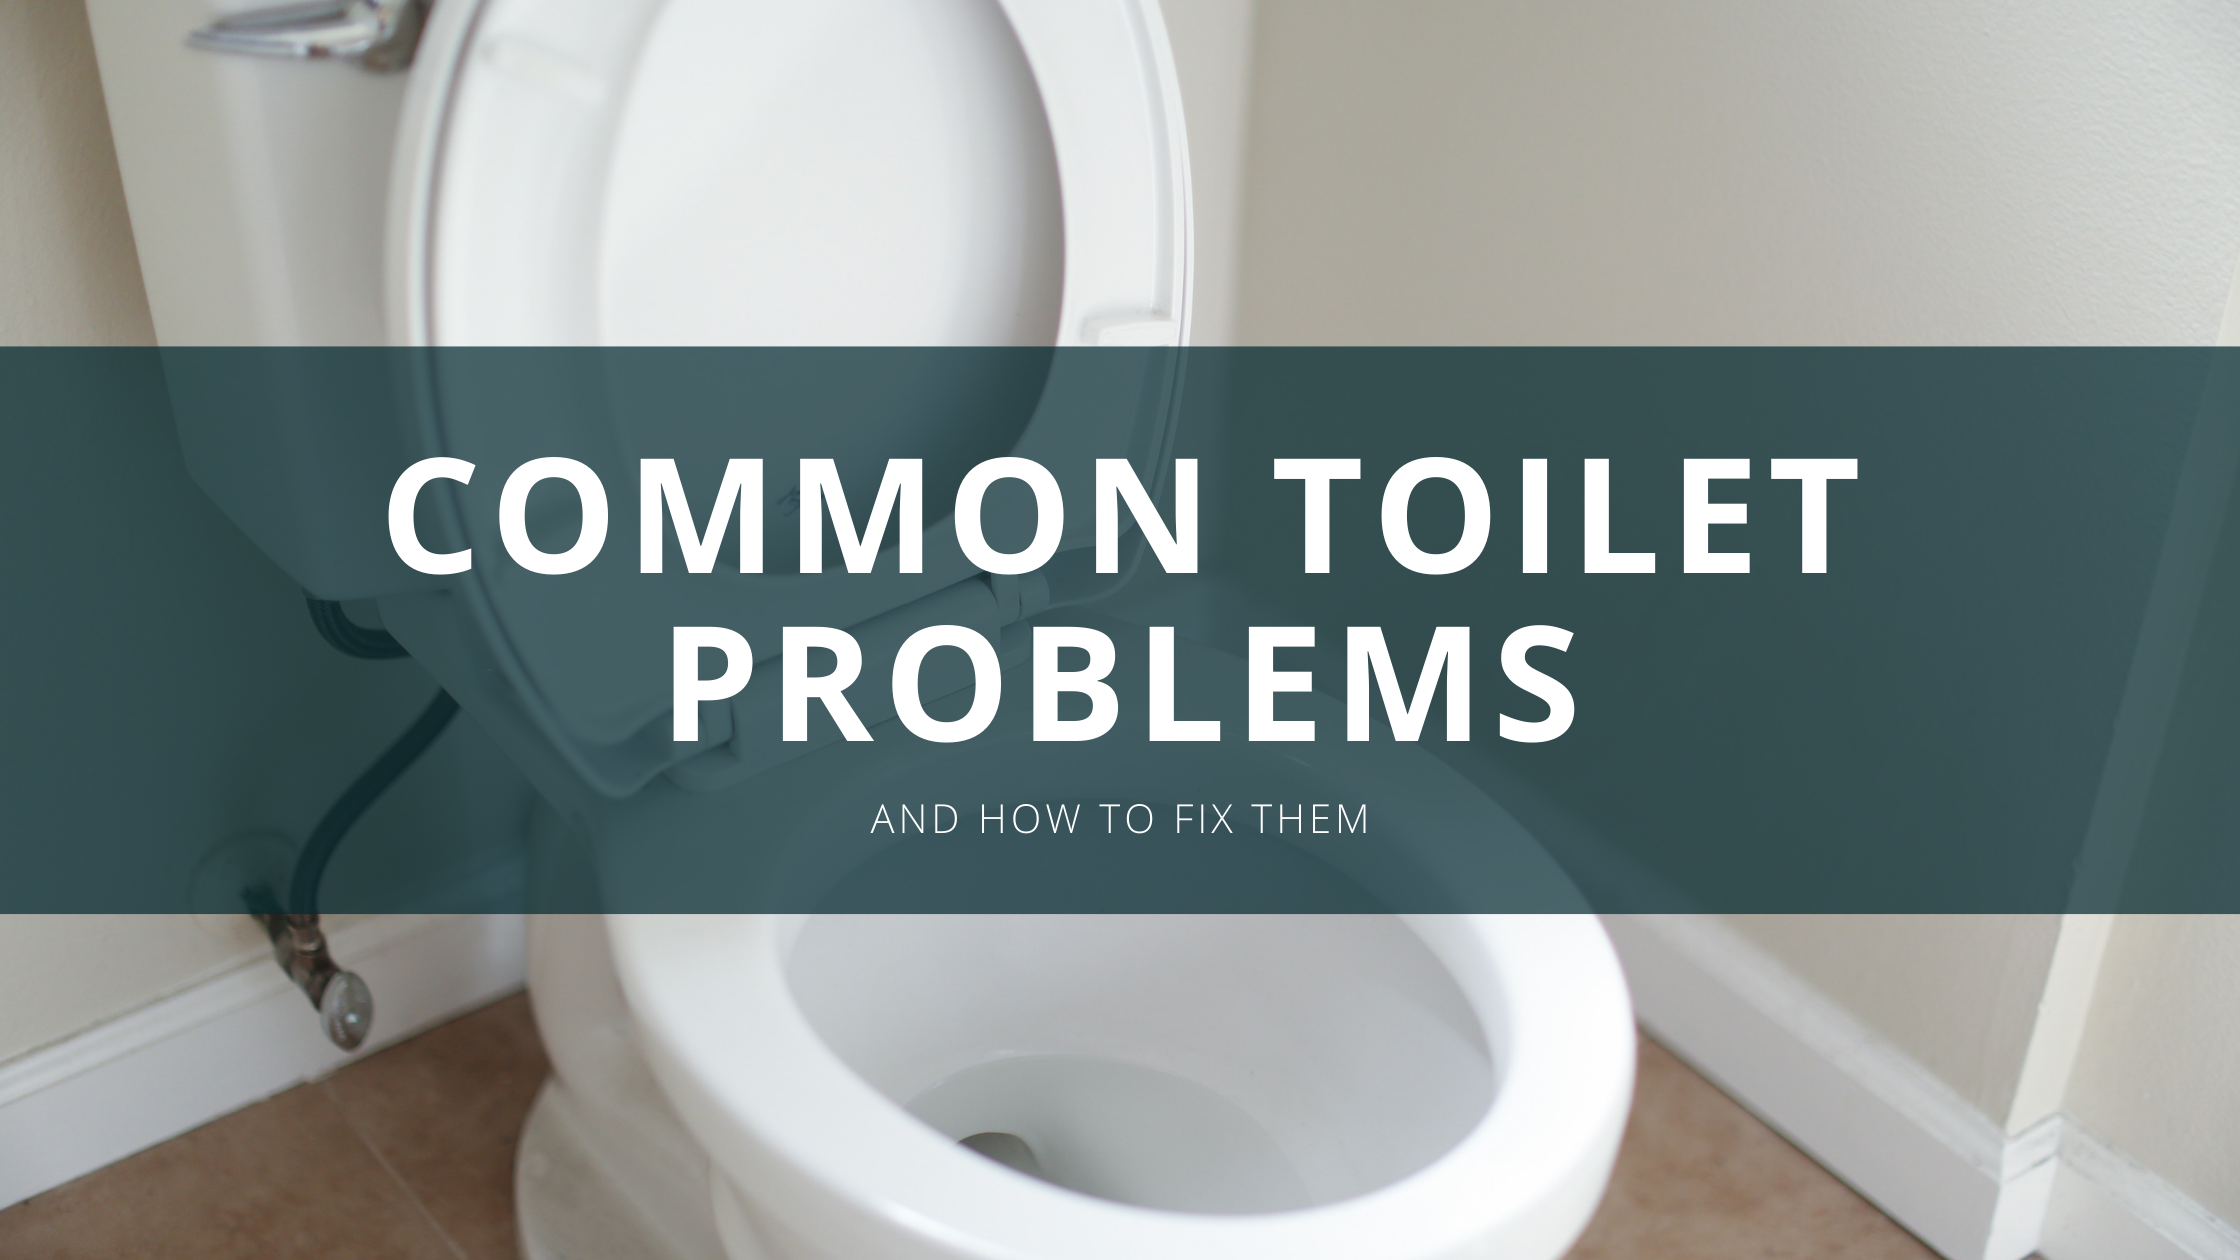 https://discountdumpsterco.com/wp-content/uploads/Common-toilet-problems-banner.png